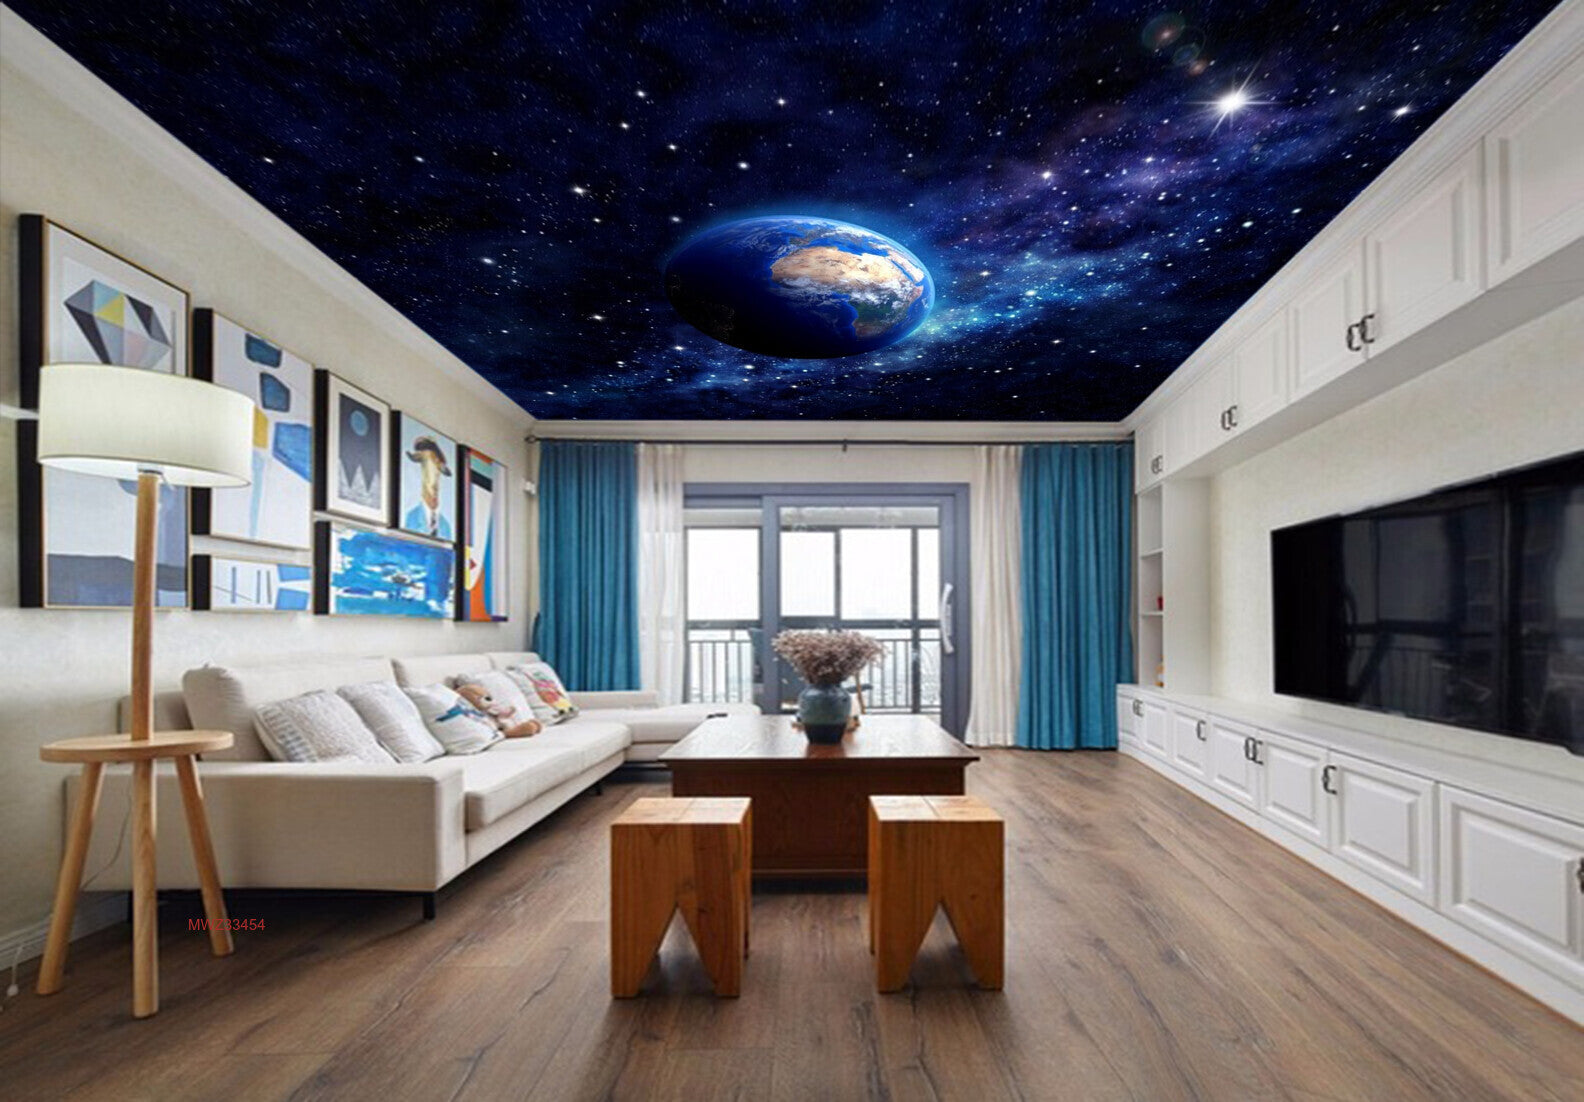 Avikalp MWZ3345 Earth Stars Space HD Wallpaper for Ceiling